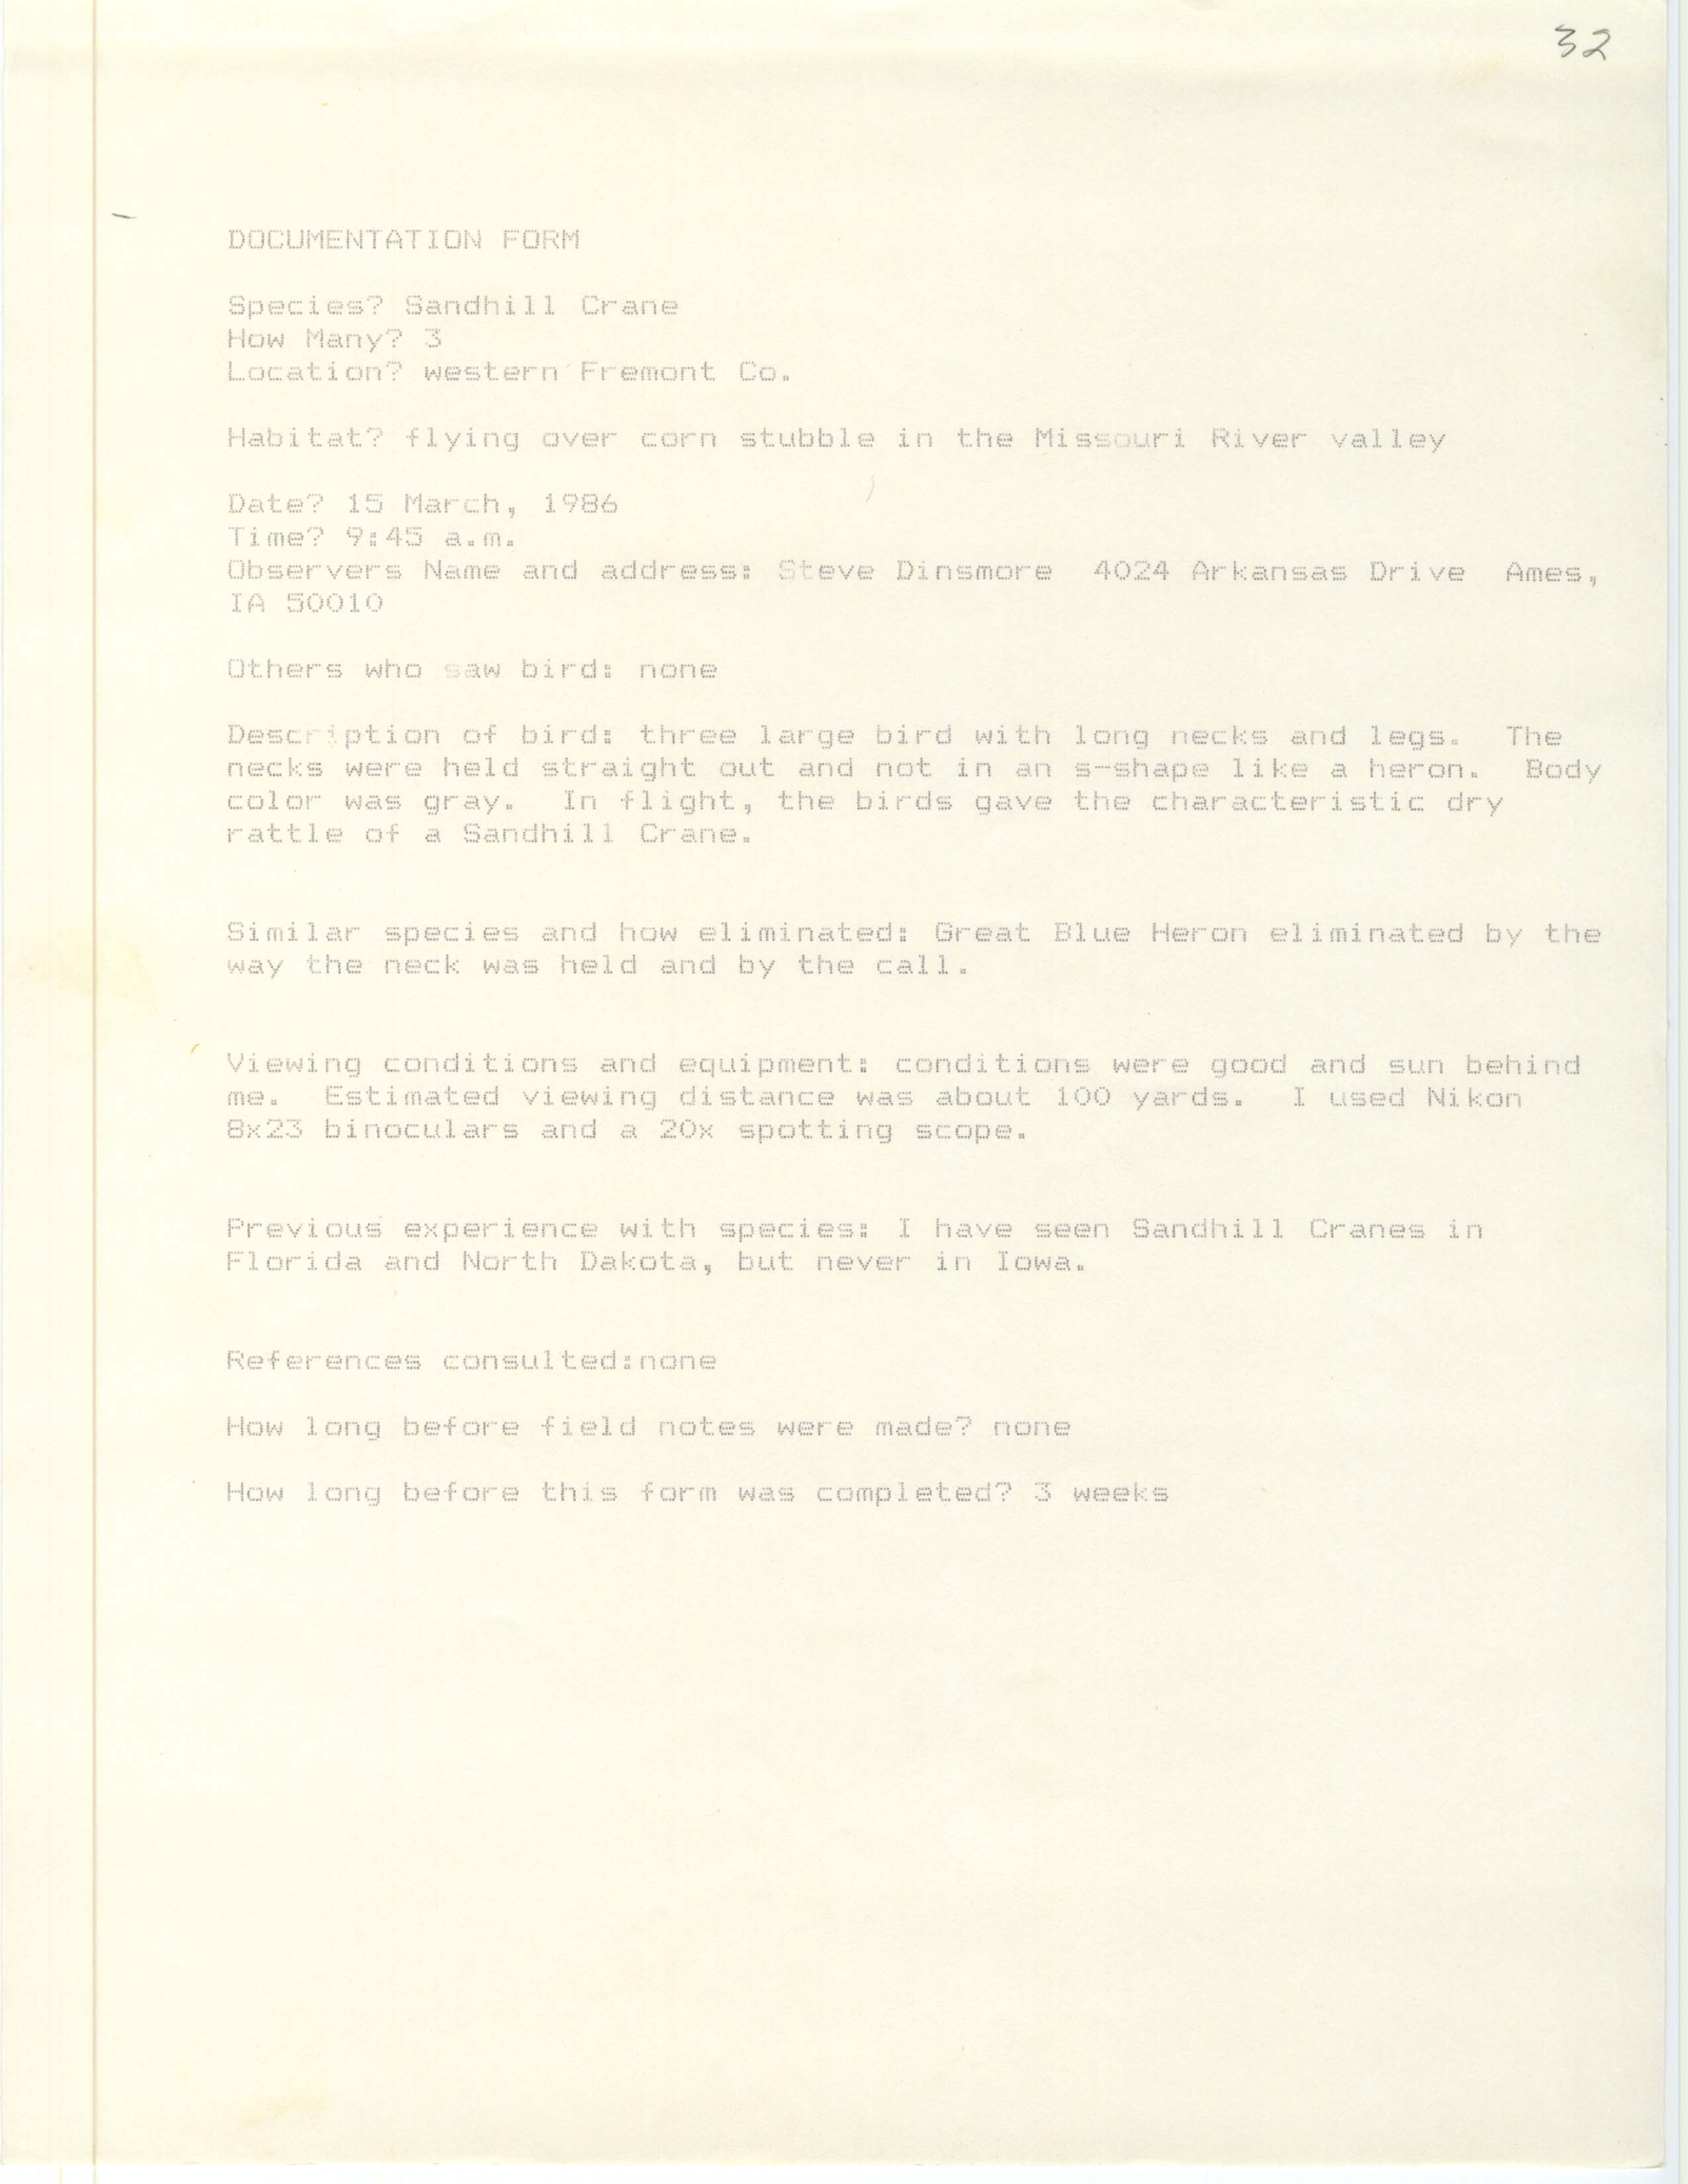 Rare bird documentation form for Sandhill Crane in western Fremont County, 1986